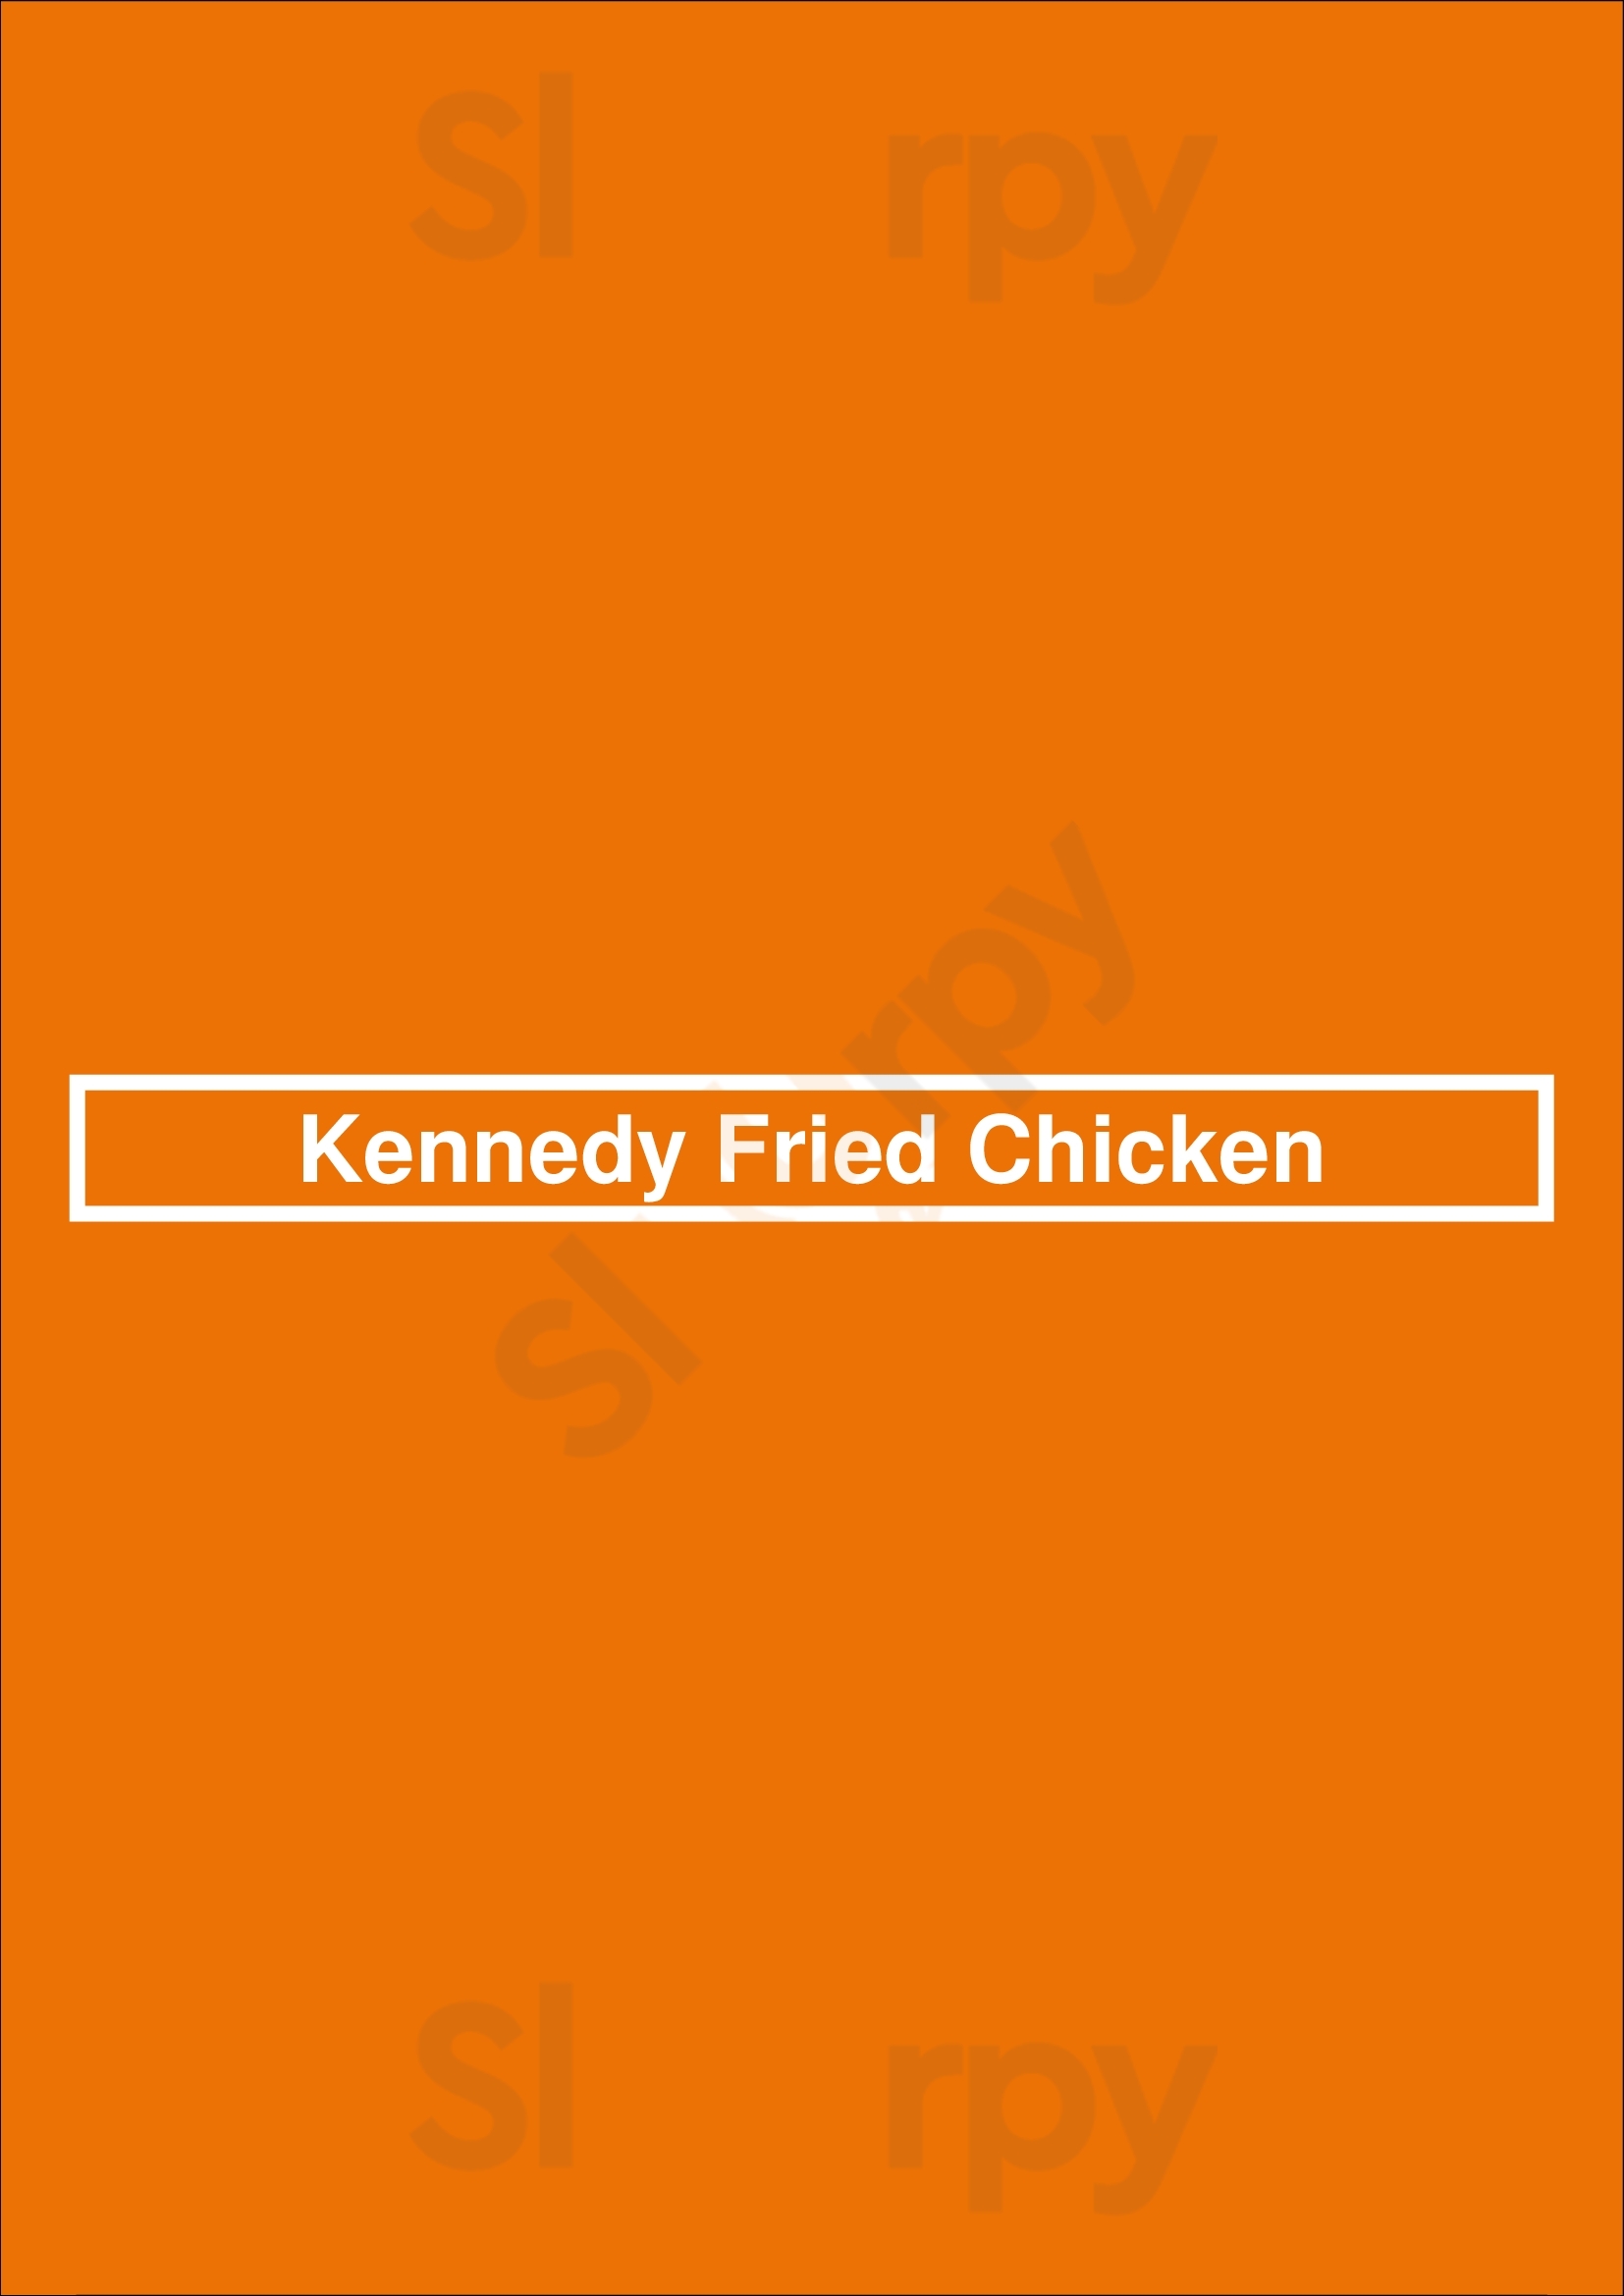 Kennedy Fried Chicken Bronx Menu - 1